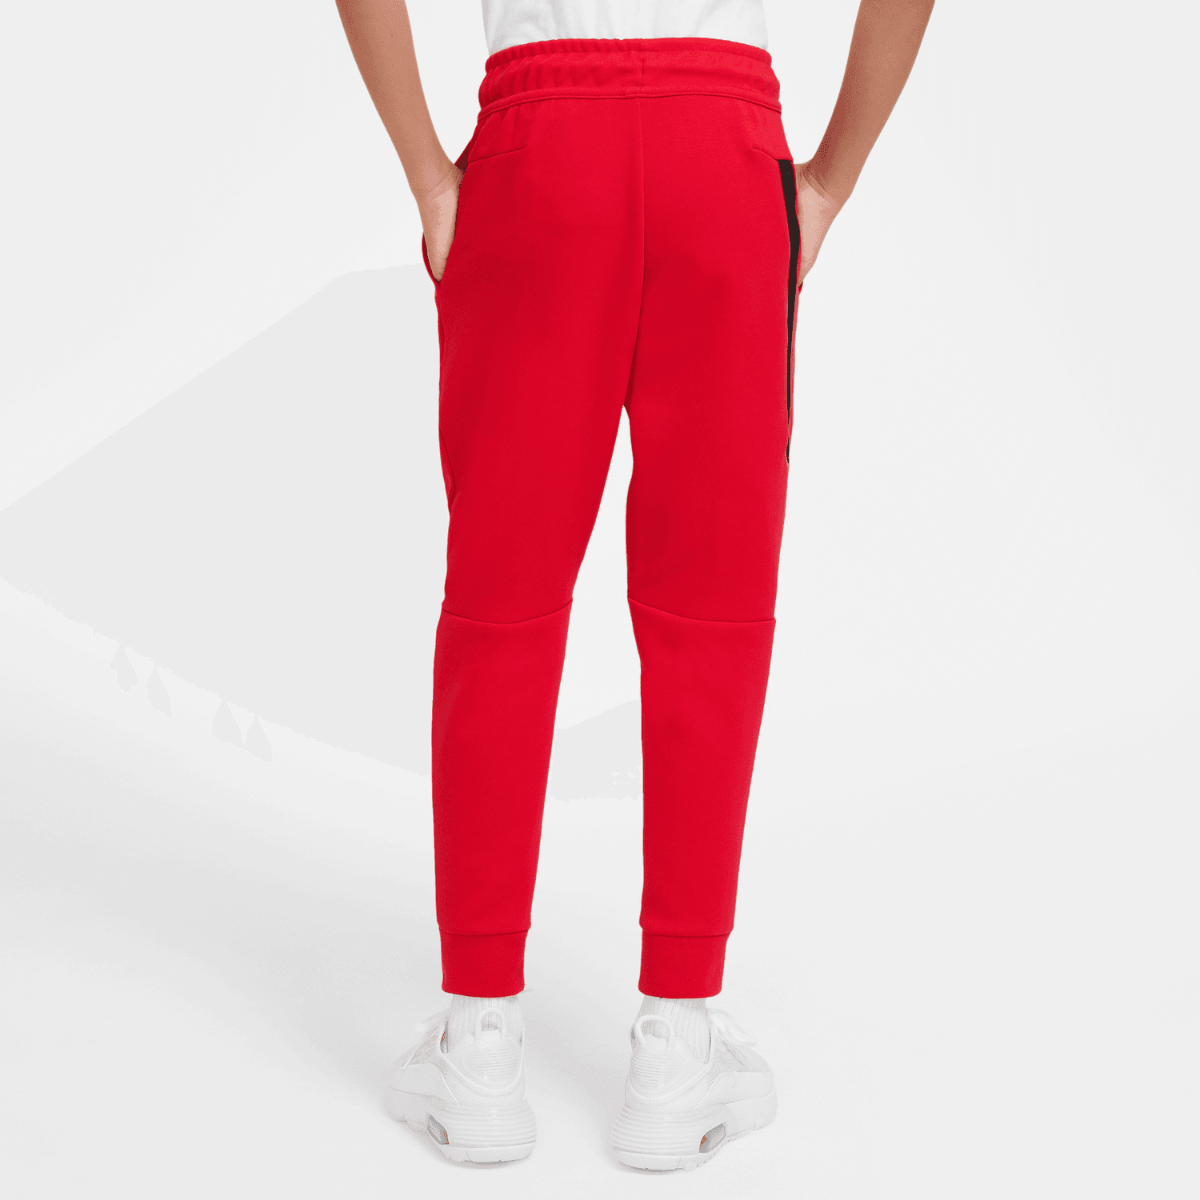 Pantalon jogging Nike Tech Fleece Junior - Rouge/Noir